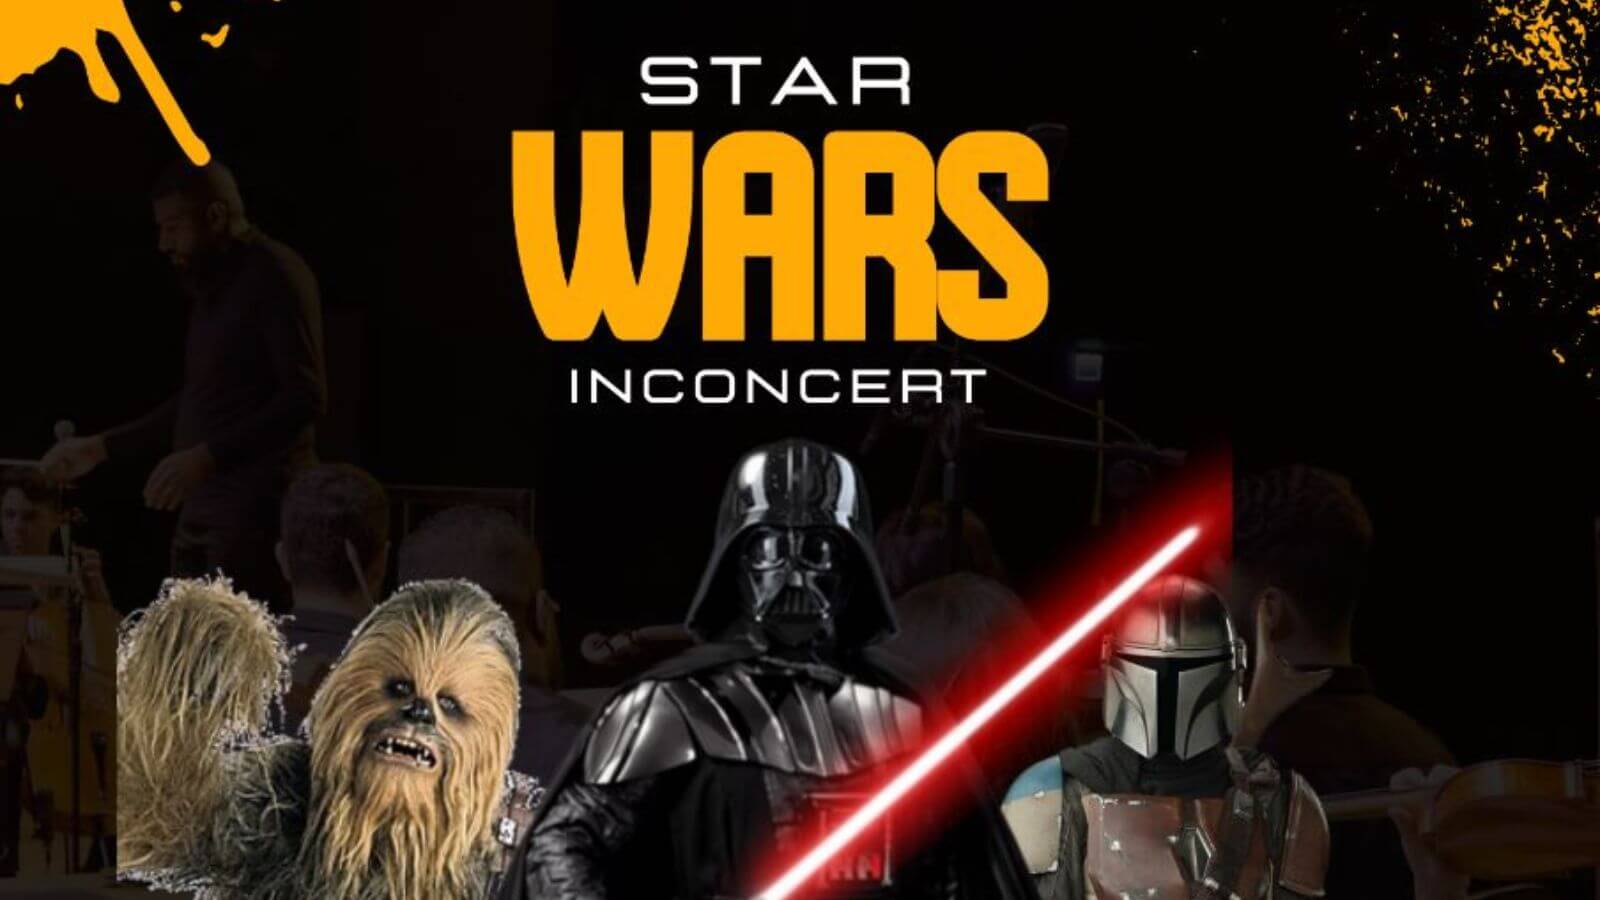 Star Wars in Concert 2